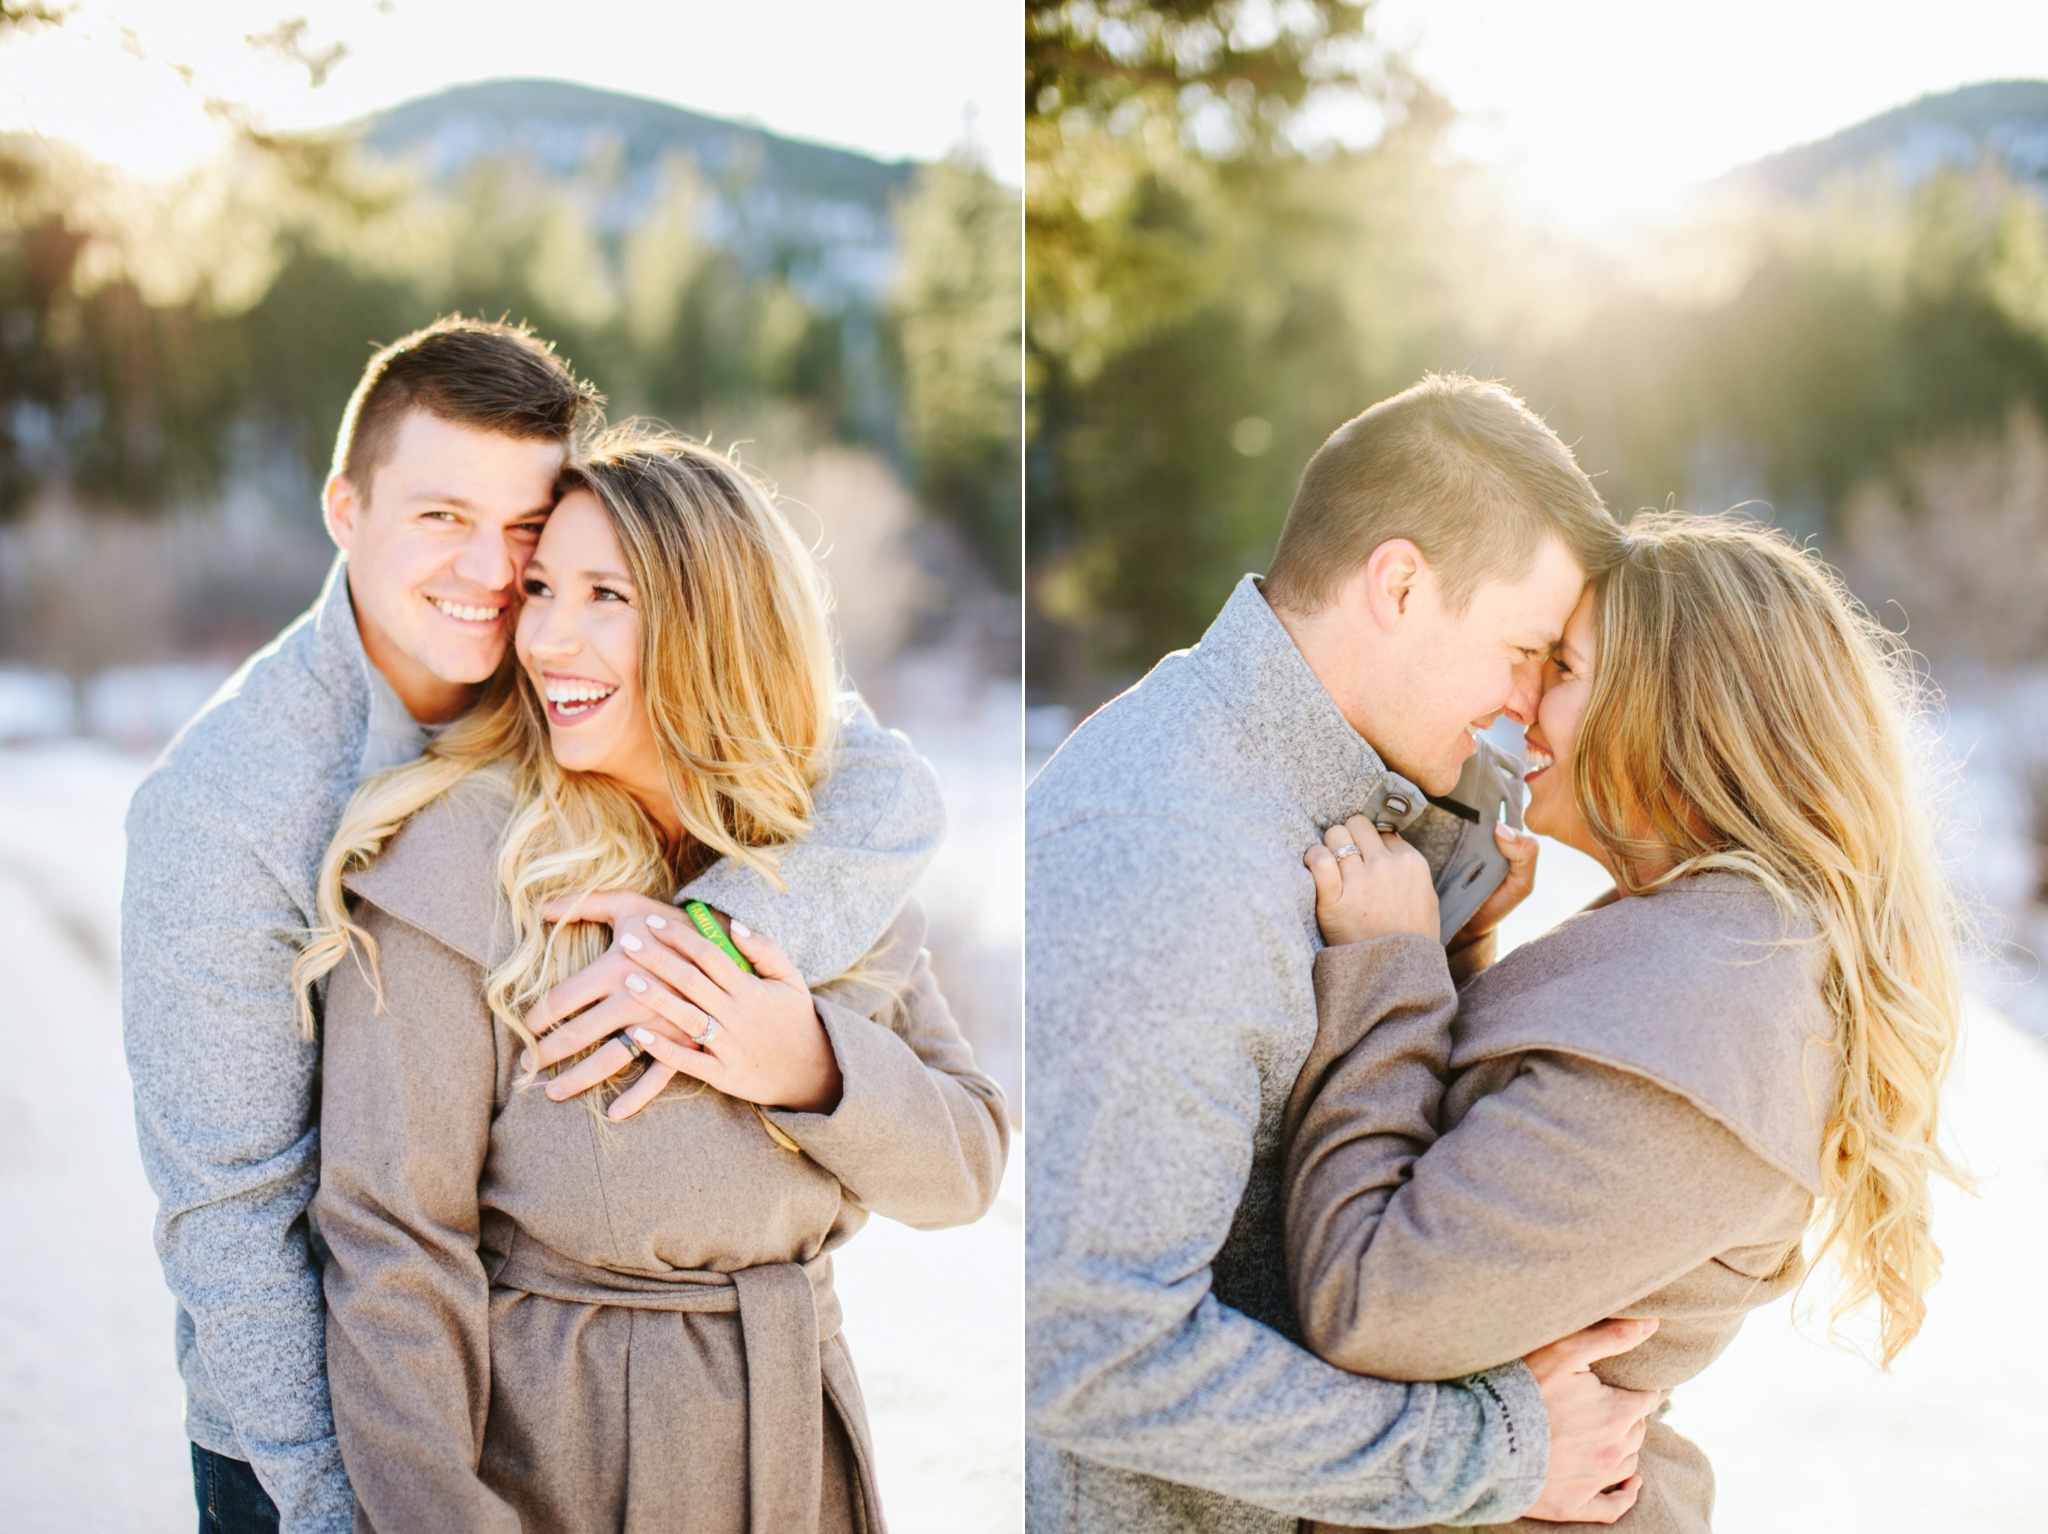 Missoula MT Winter Wonderland Engagement Photos Couple Hugging